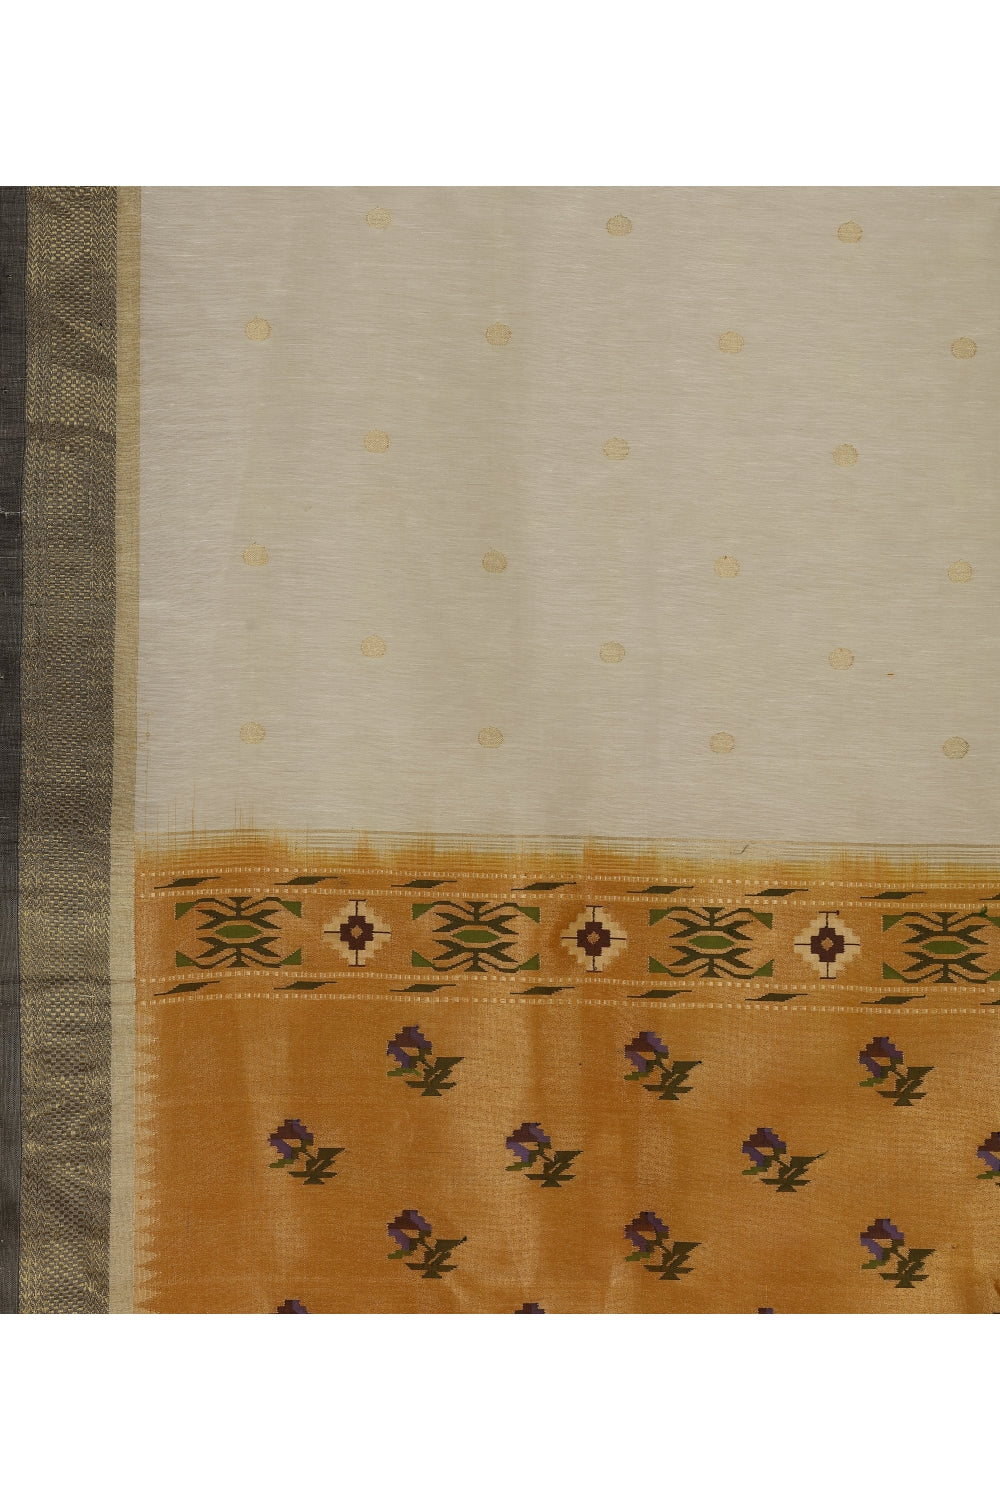 White and Gold Paithani Handloom Saree with Purple Flower Motif Devam